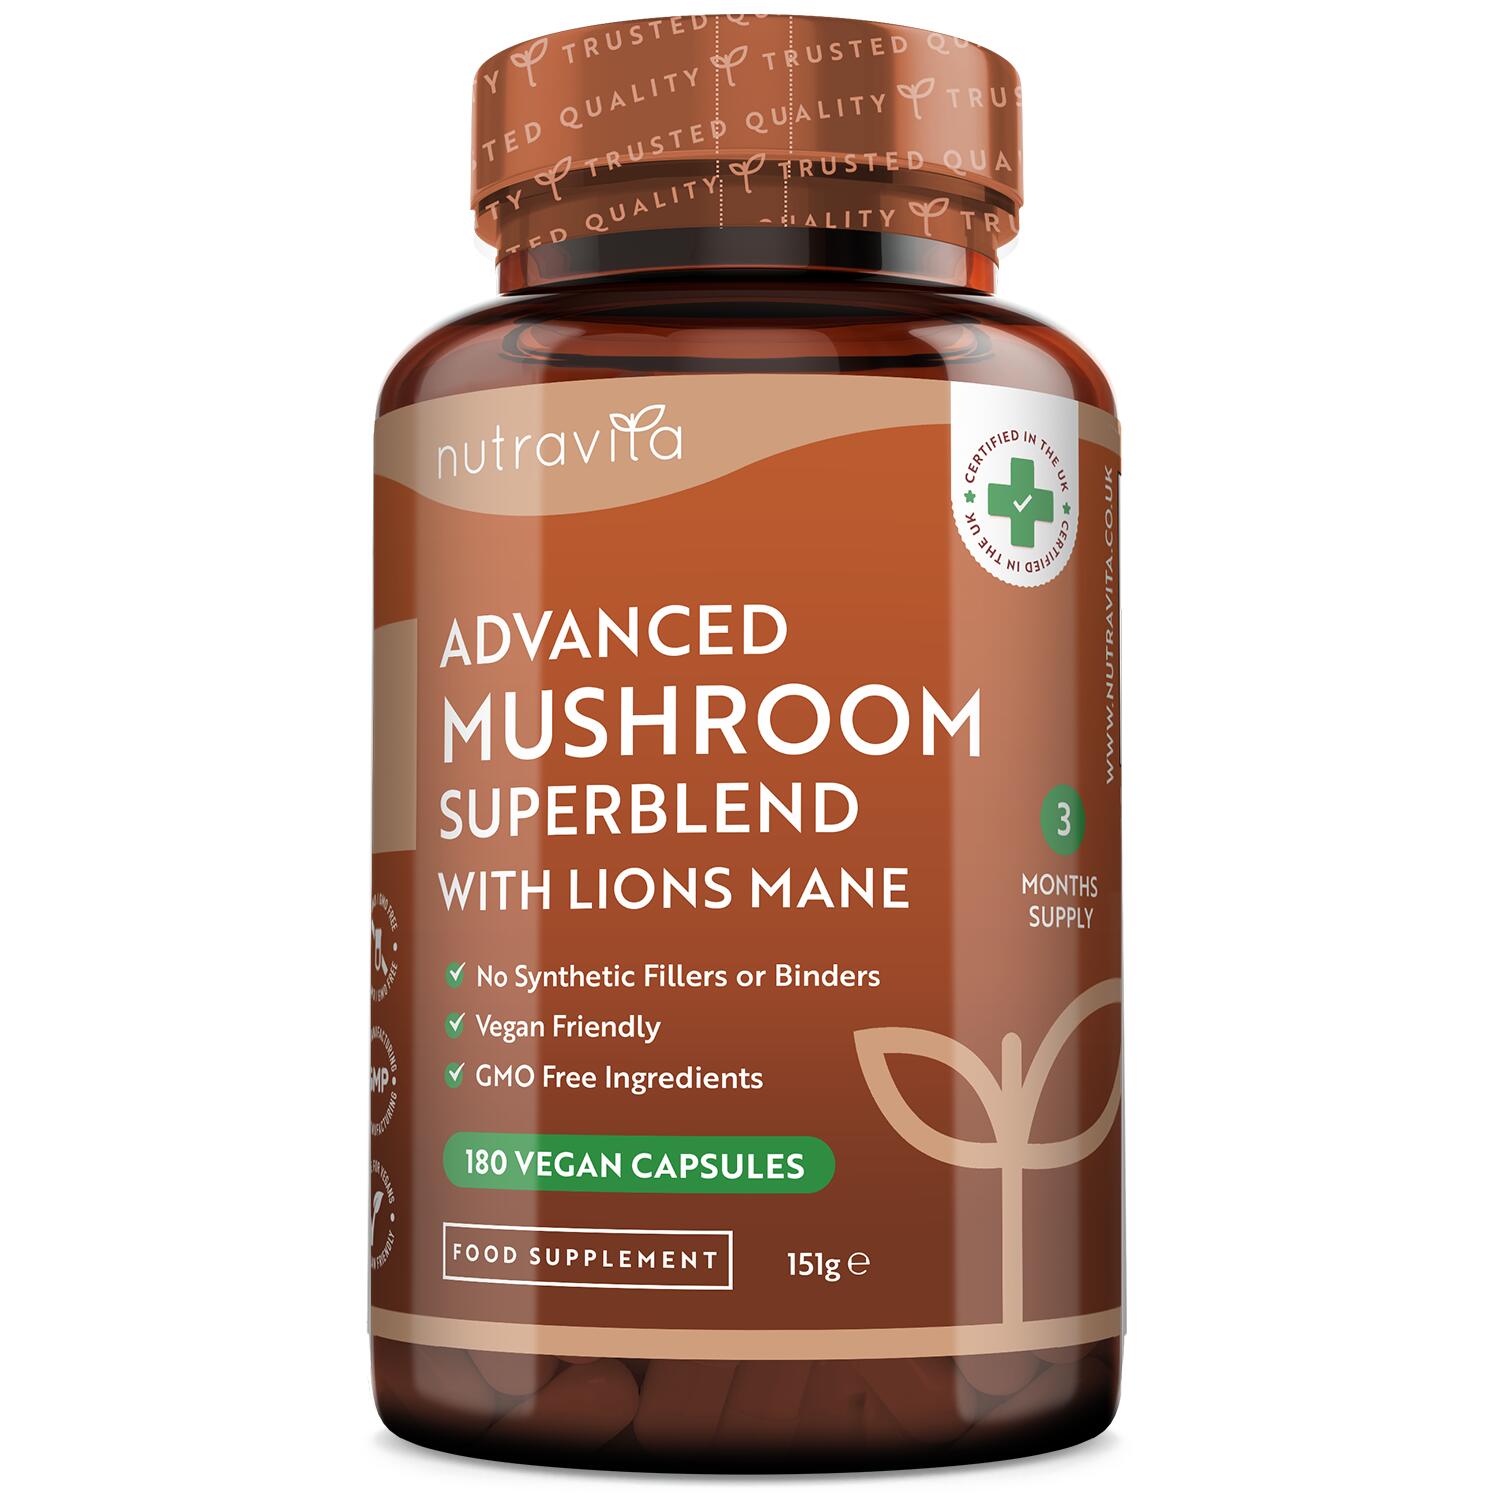 NUTRIVITA Nutravita Advanced Mushroom Superblend - 180 Vegan Capsules